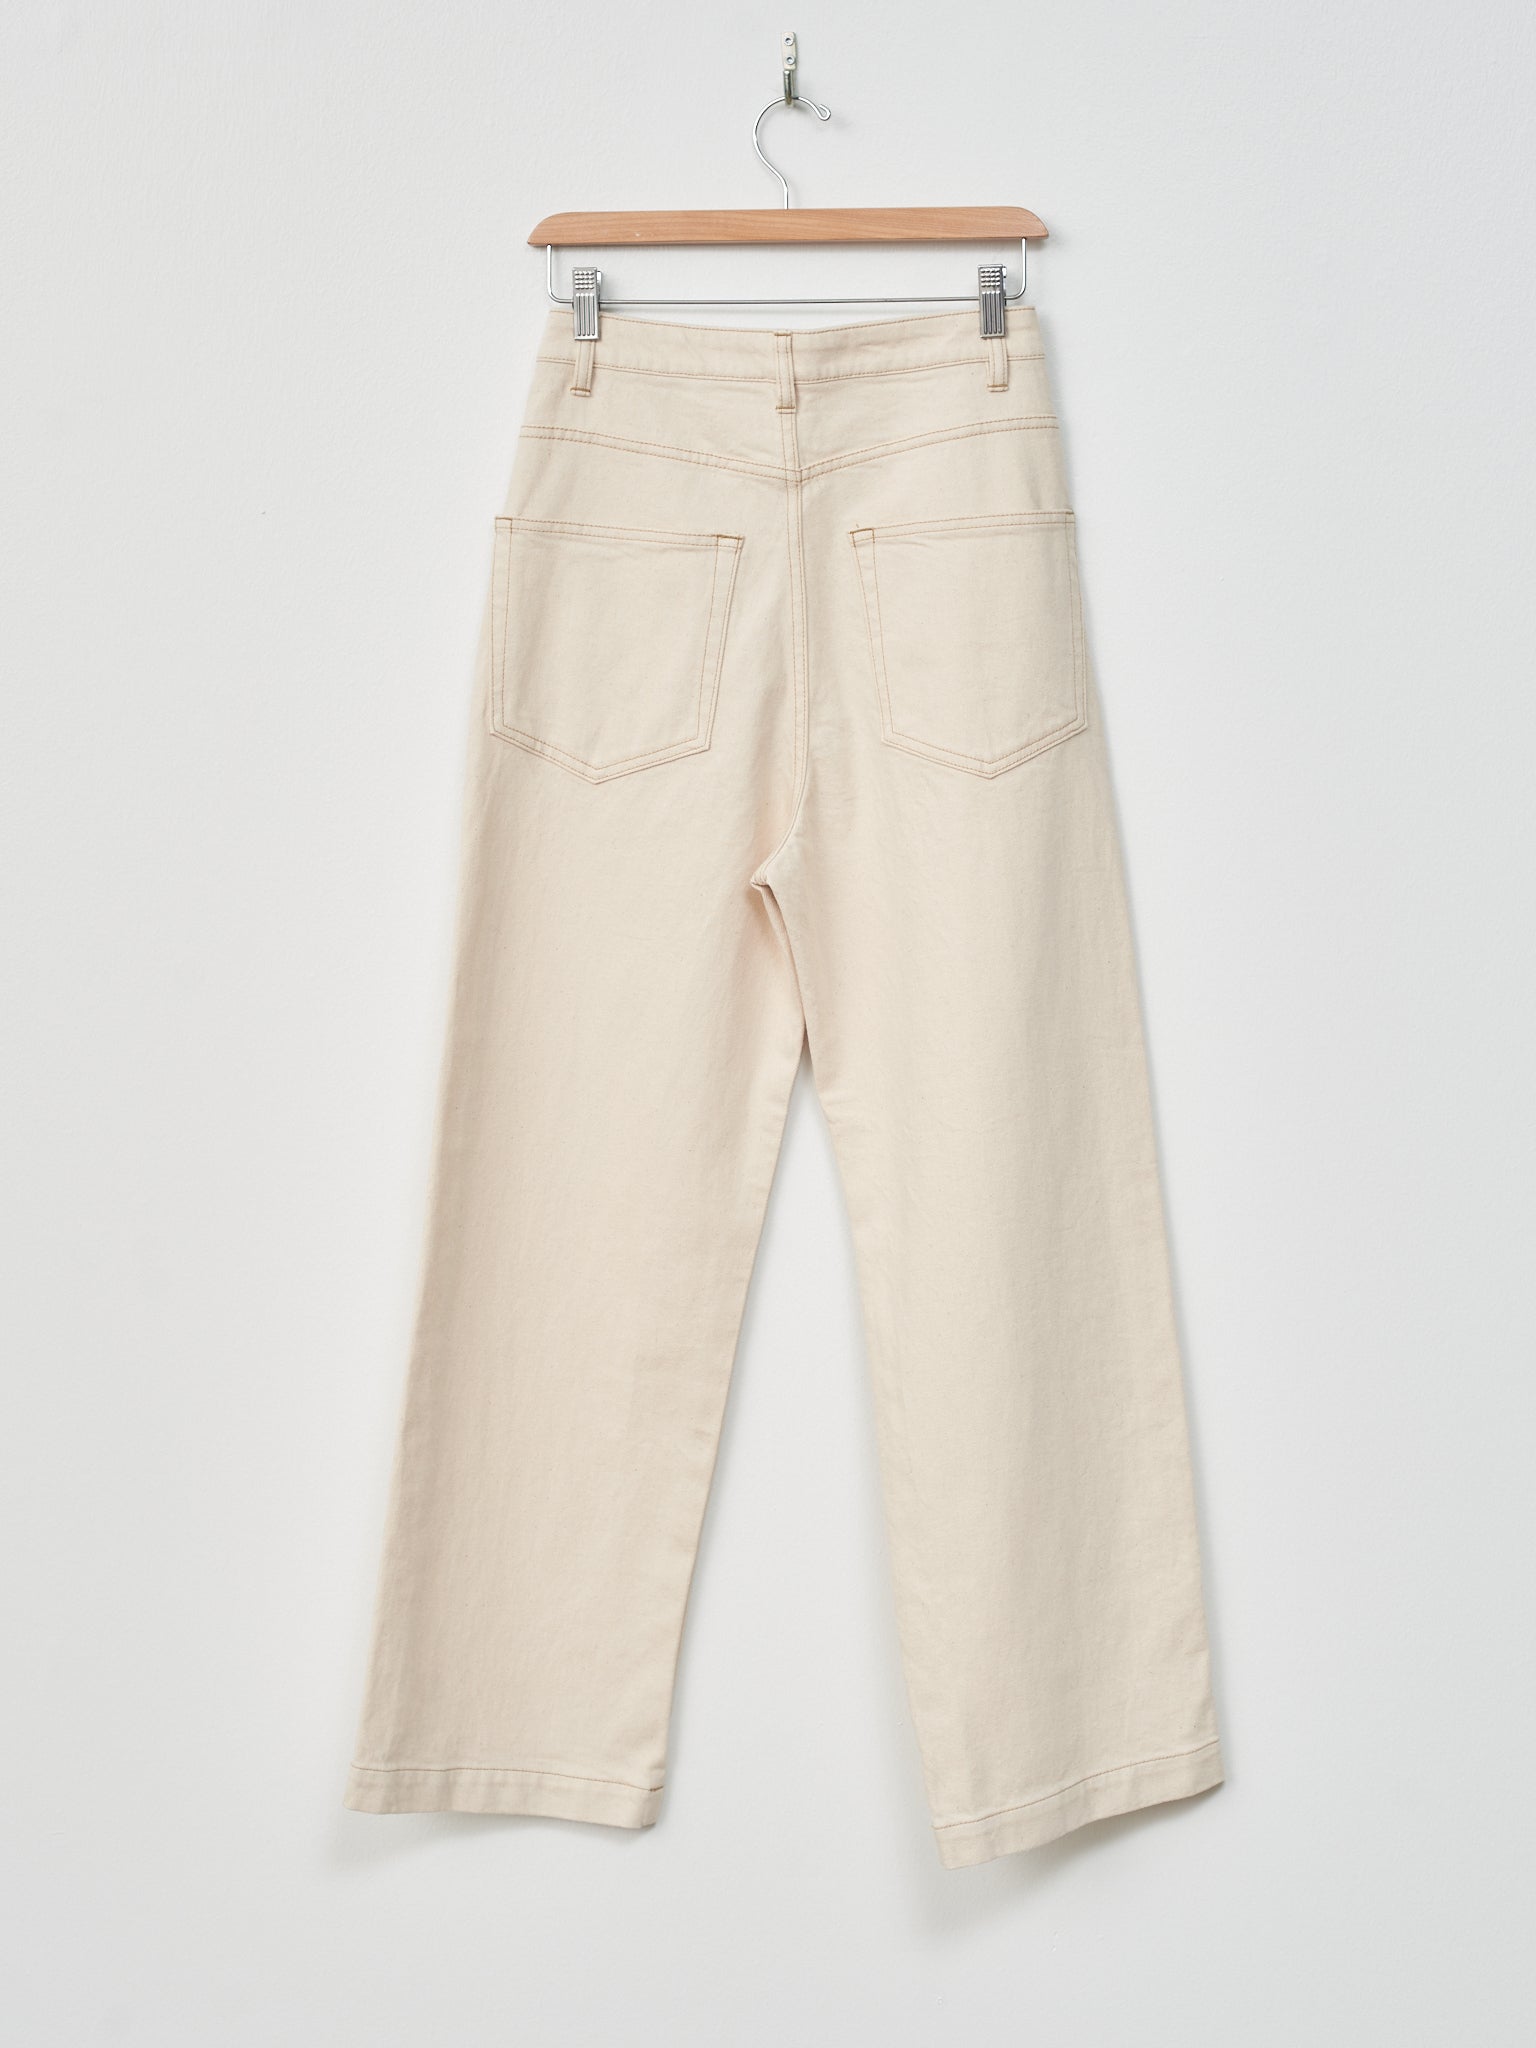 Namu Shop - Nicholson & Nicholson SOPHIA Jeans - Off White